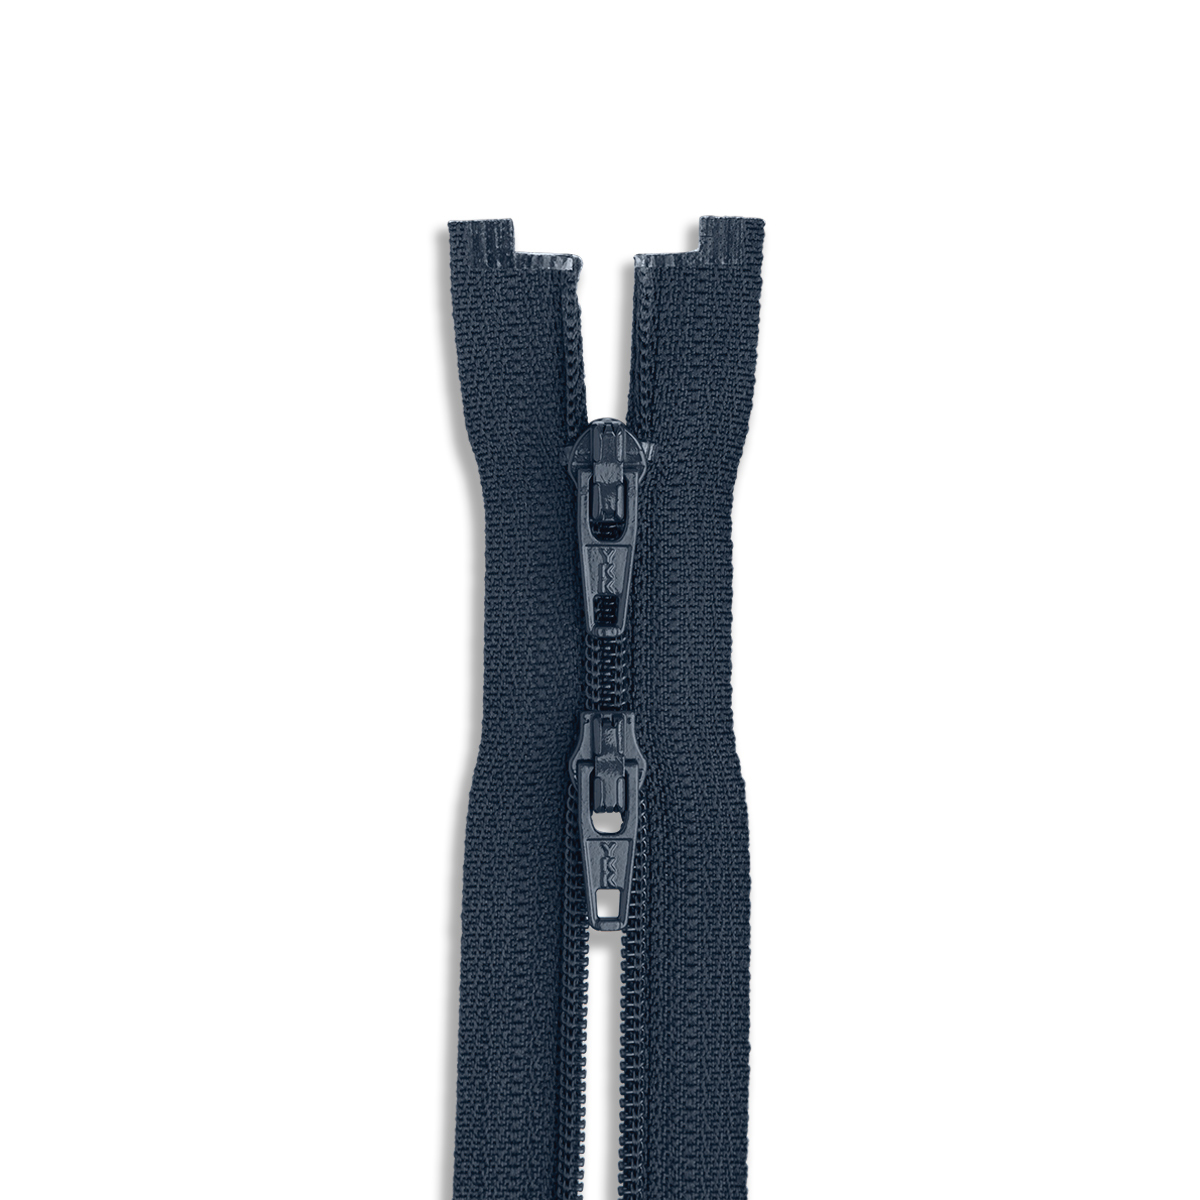 Outerwear Two Way Separating Zipper - Silver Teeth - Black